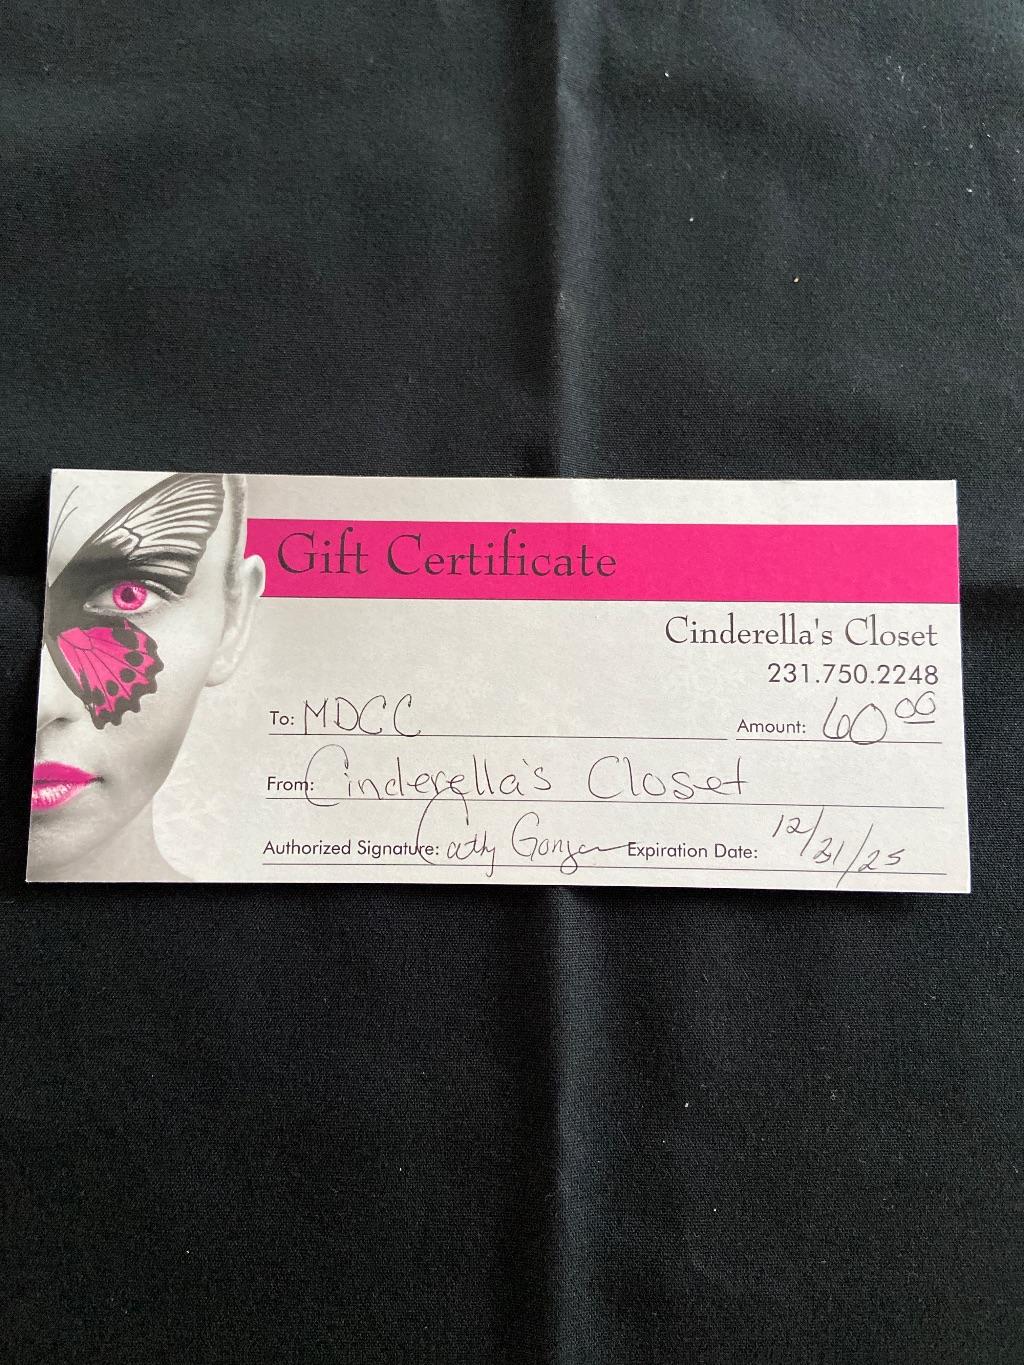 Cinderella's Closet $60 Gift Certificate